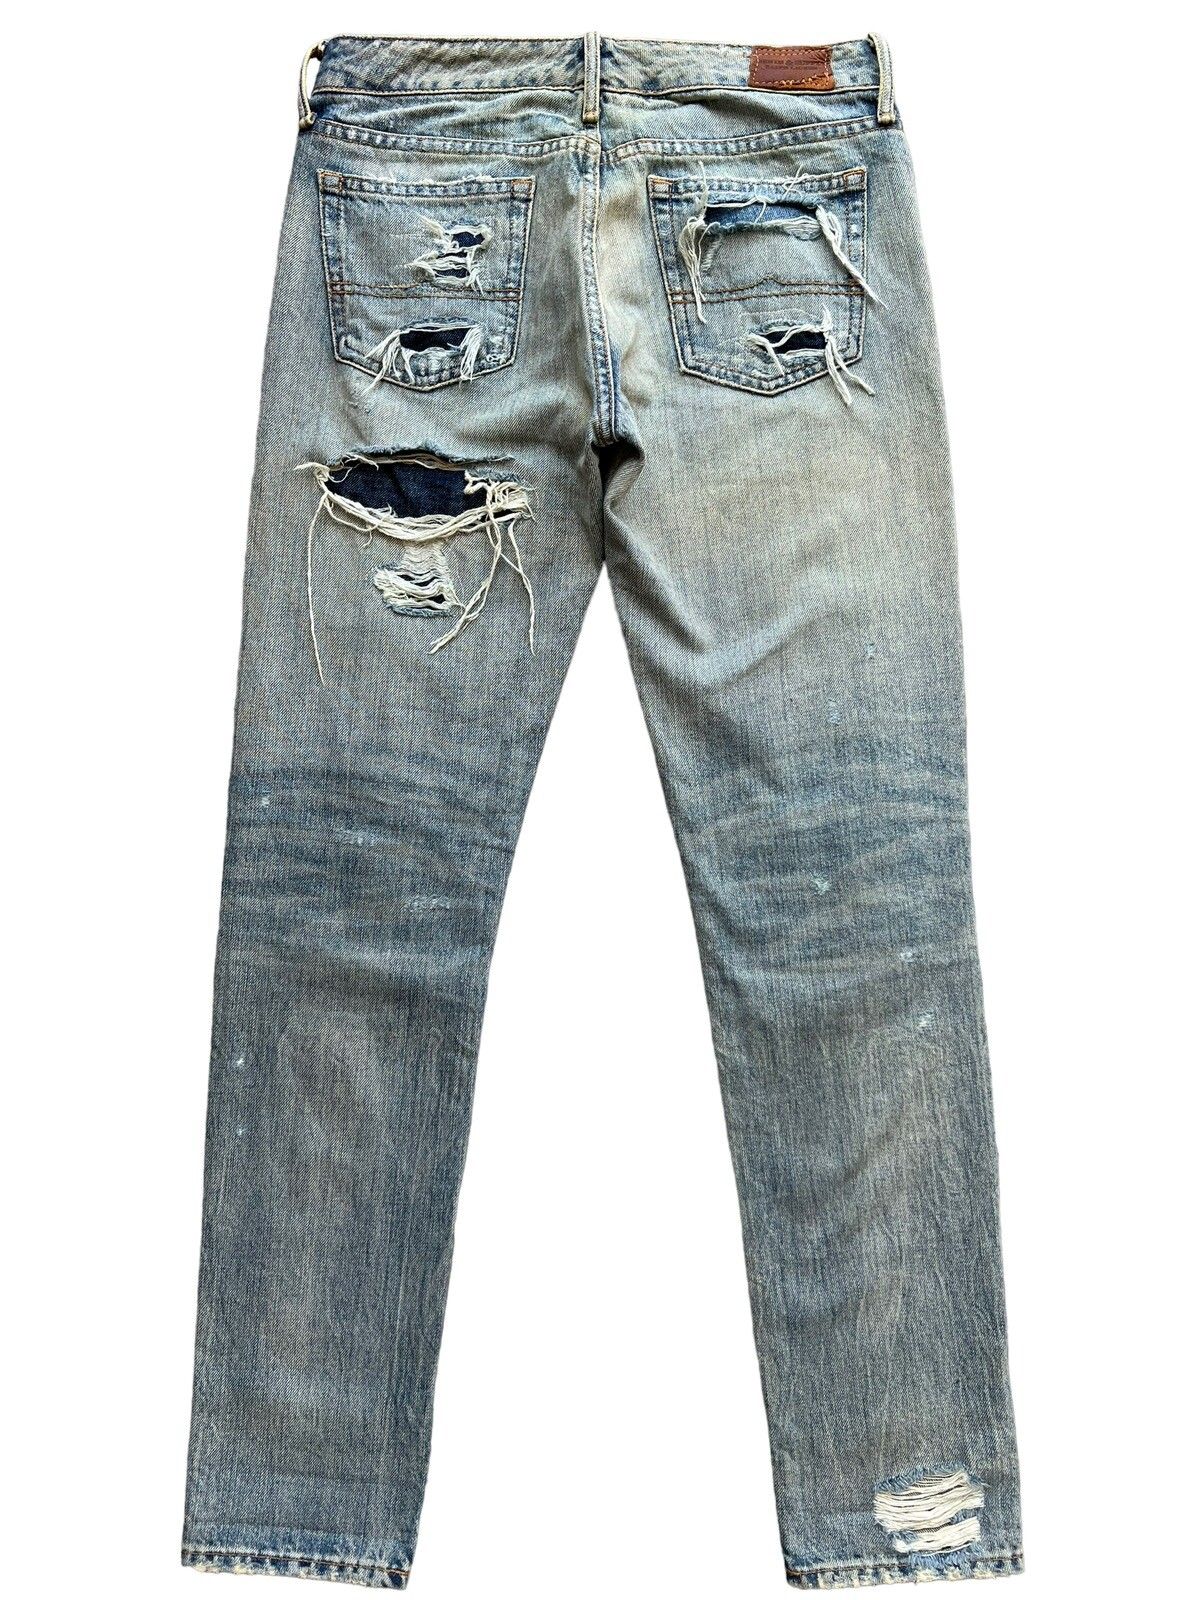 Ralph Lauren Rusty Ripped Distressed Denim Jeans 28x29 - 3